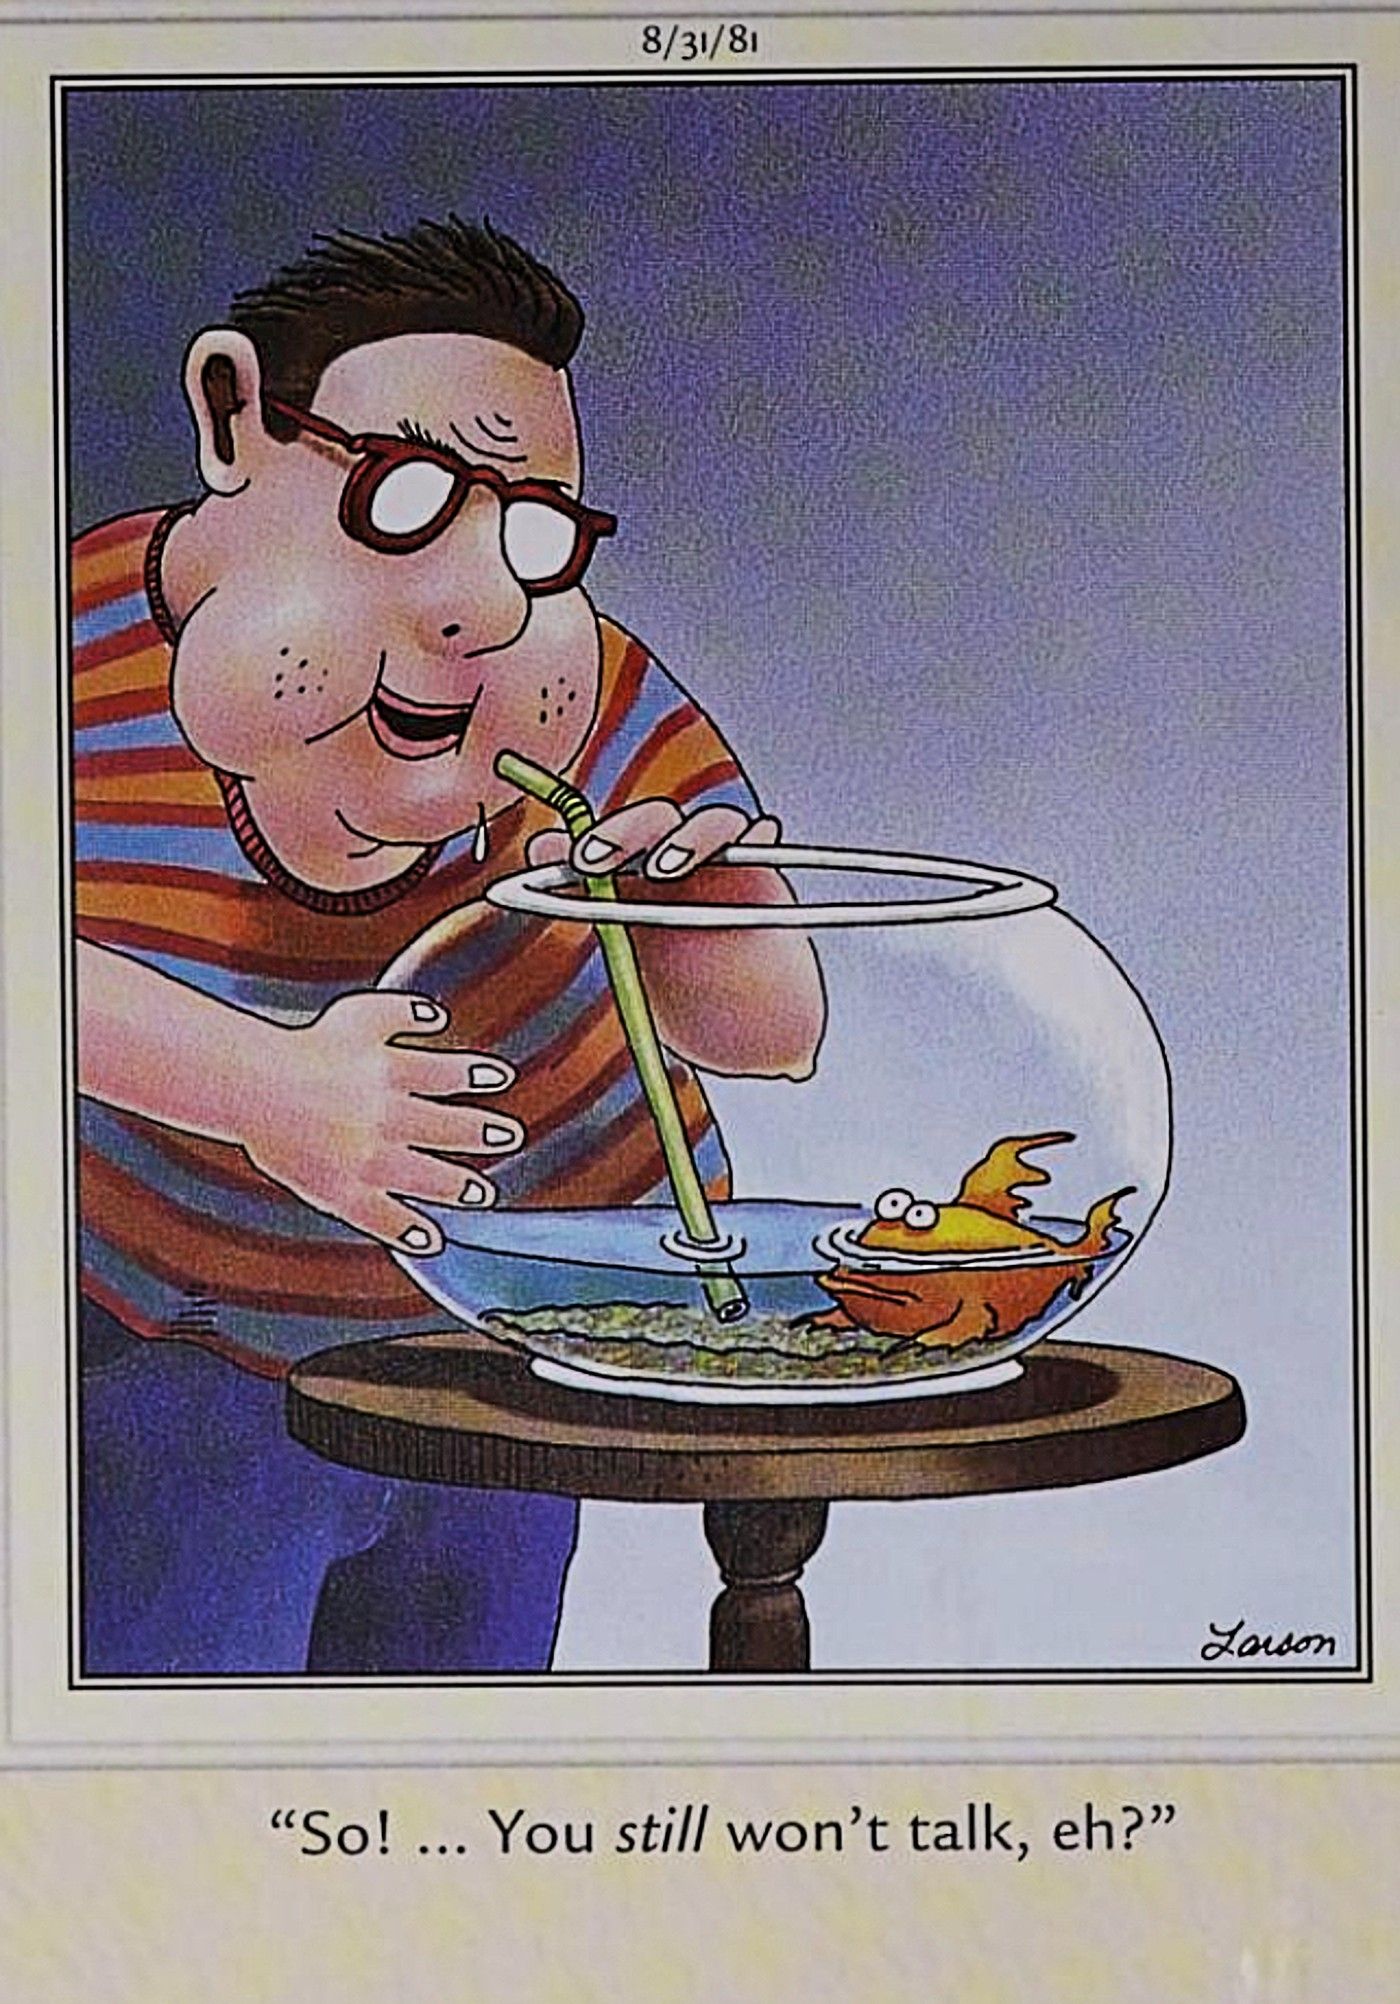 Far Side, kid sucking water out of fish bowl to make goldfish talk